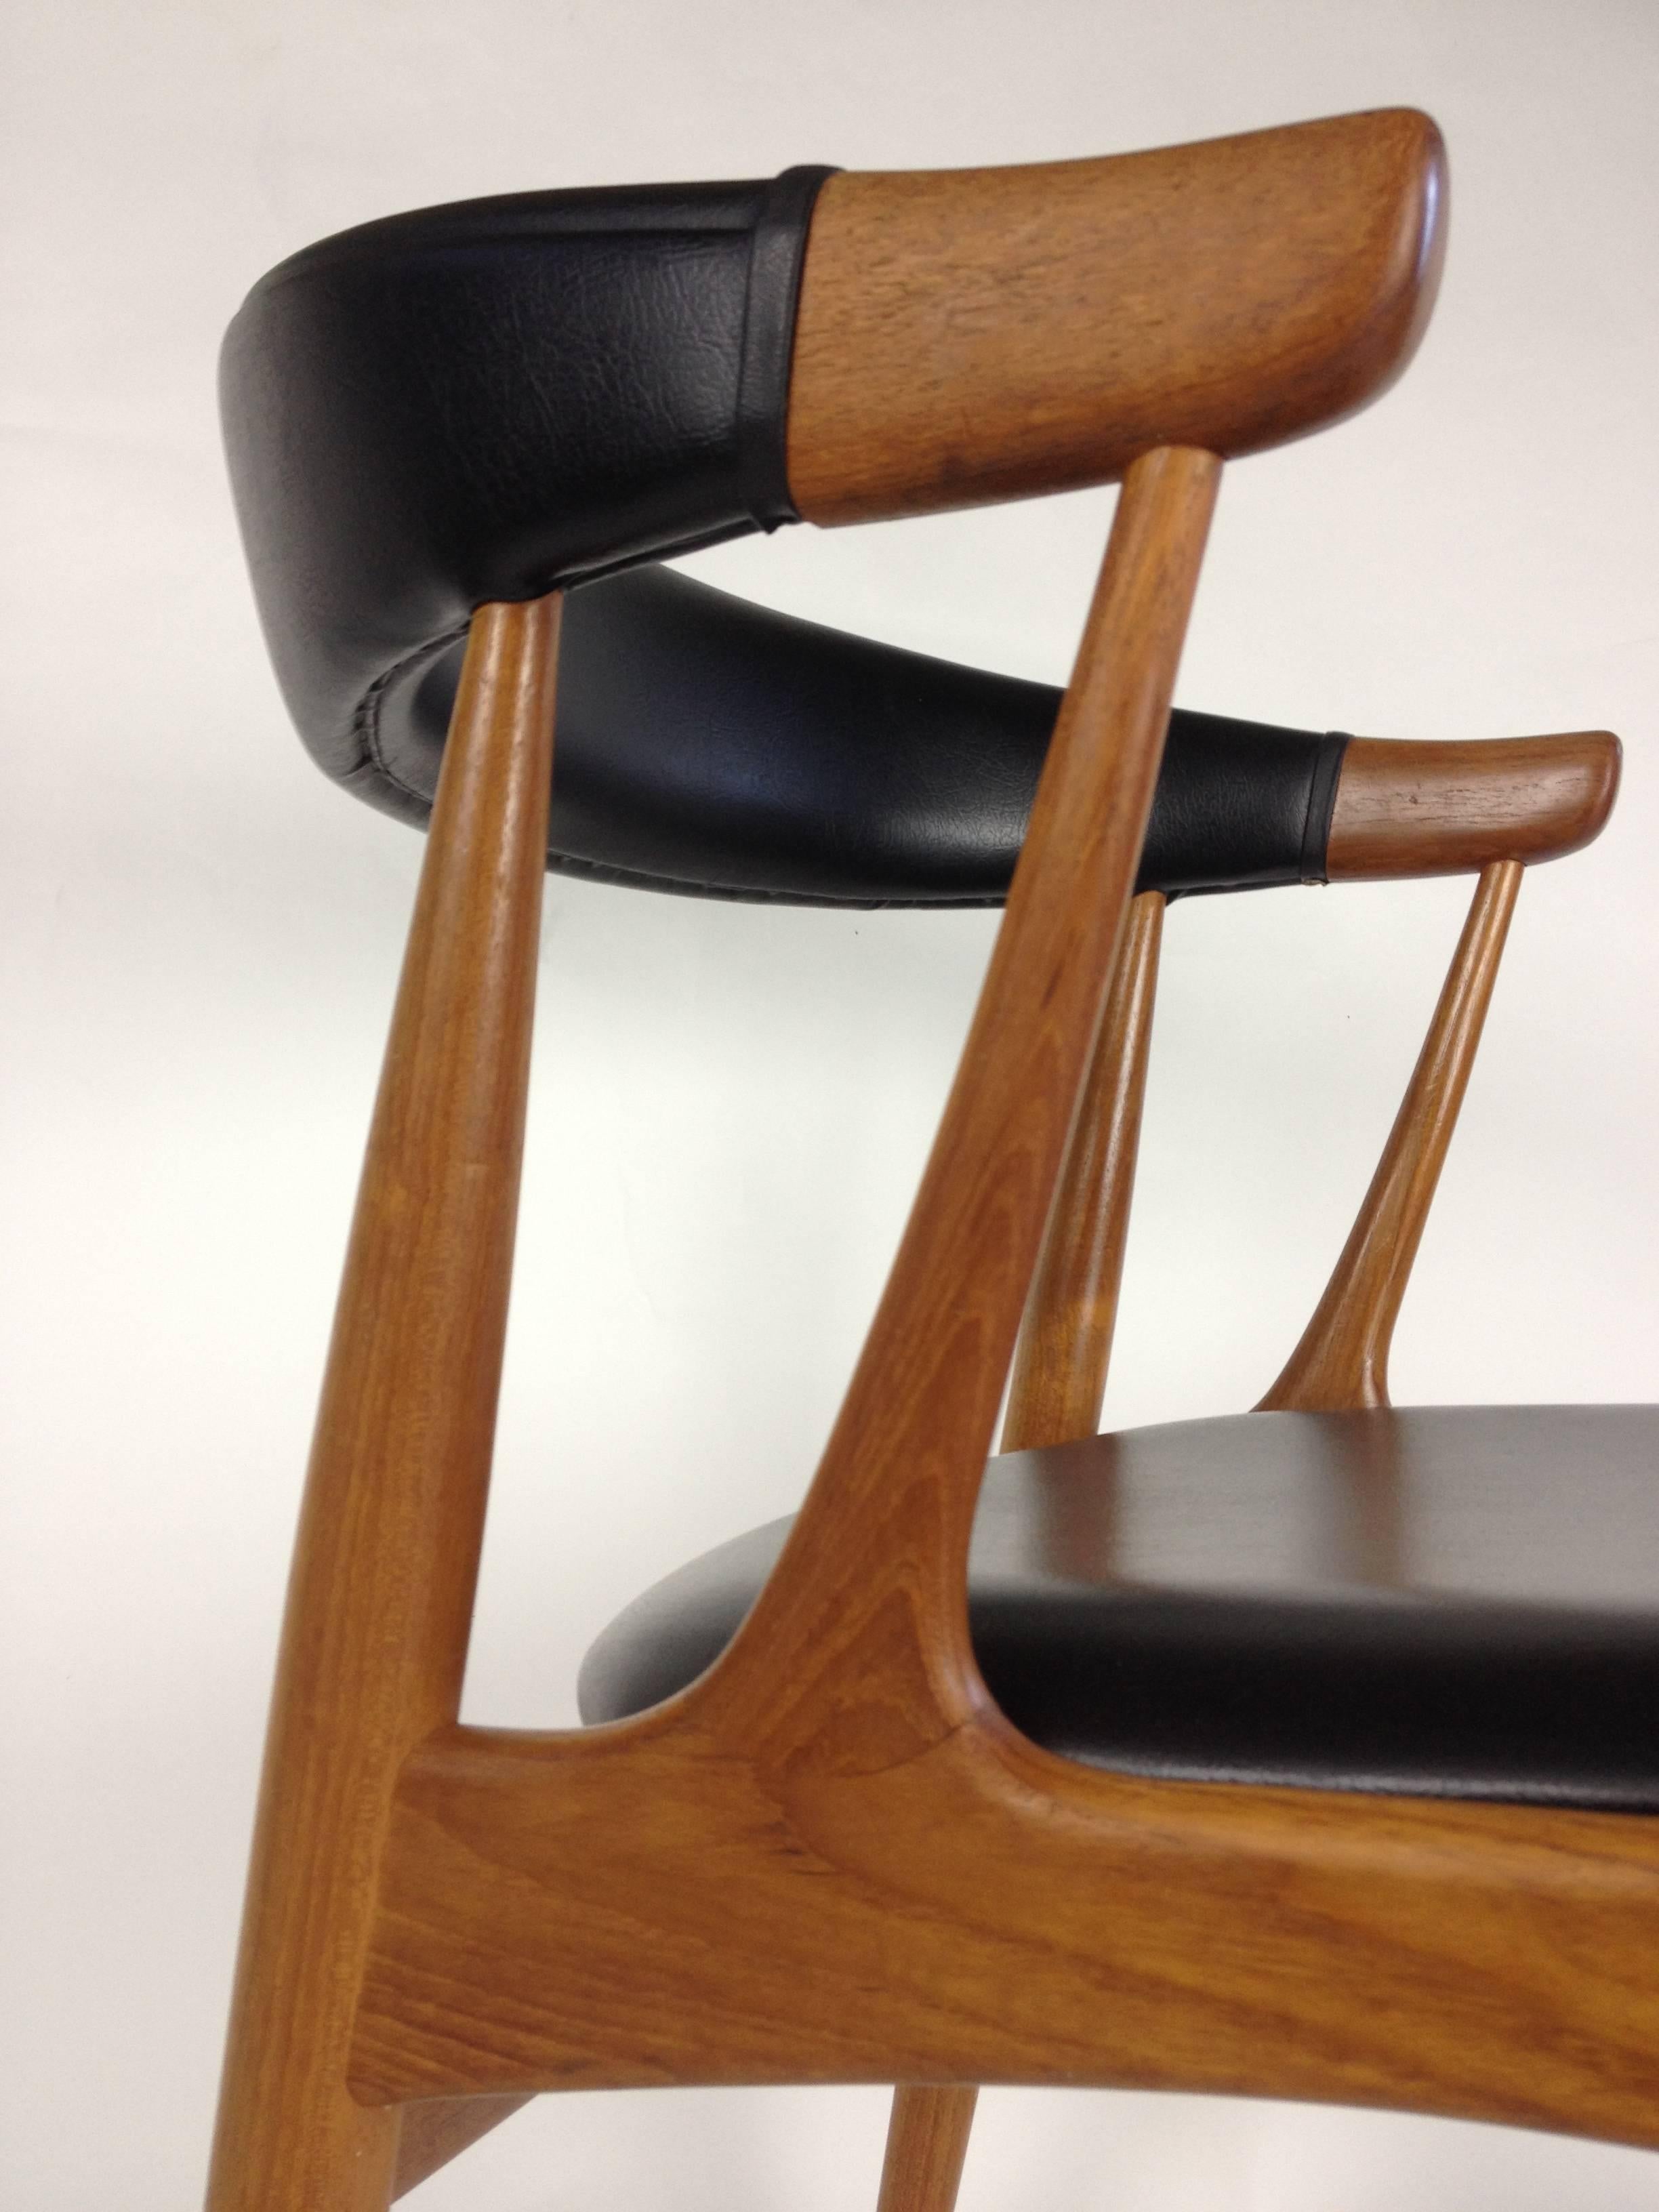 Striking Mid-Century Modern Teak Chair Designed by Johannes Andersen - Denmark For Sale 2